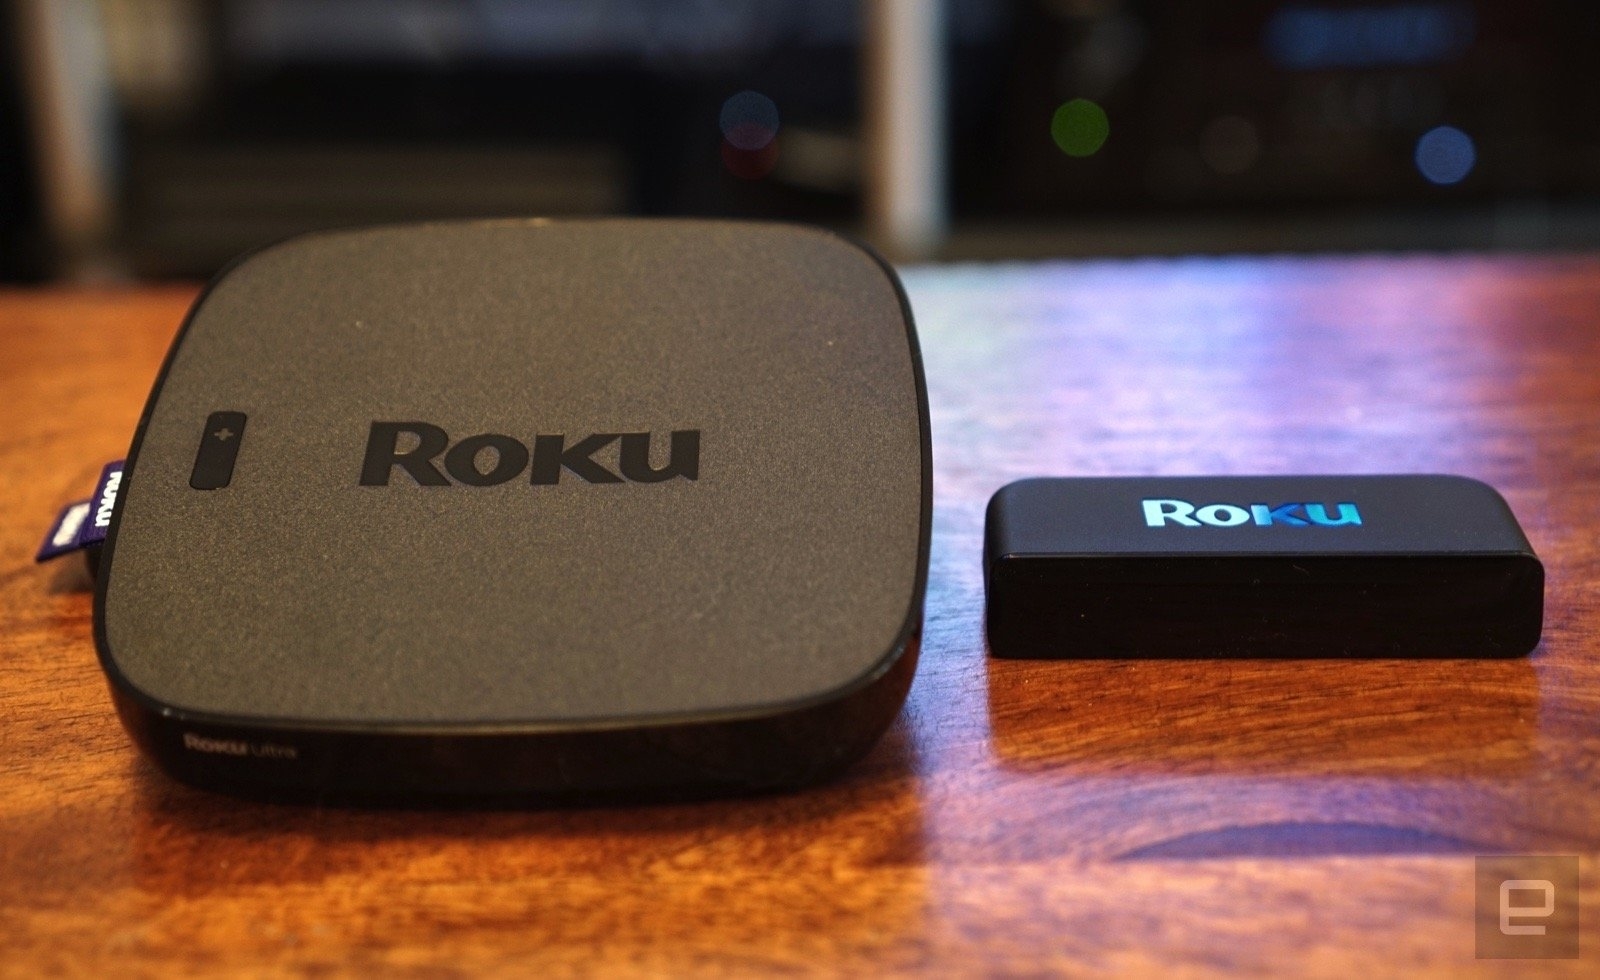 Roku bought a Sonos-like company focused on multi-room audio | DeviceDaily.com